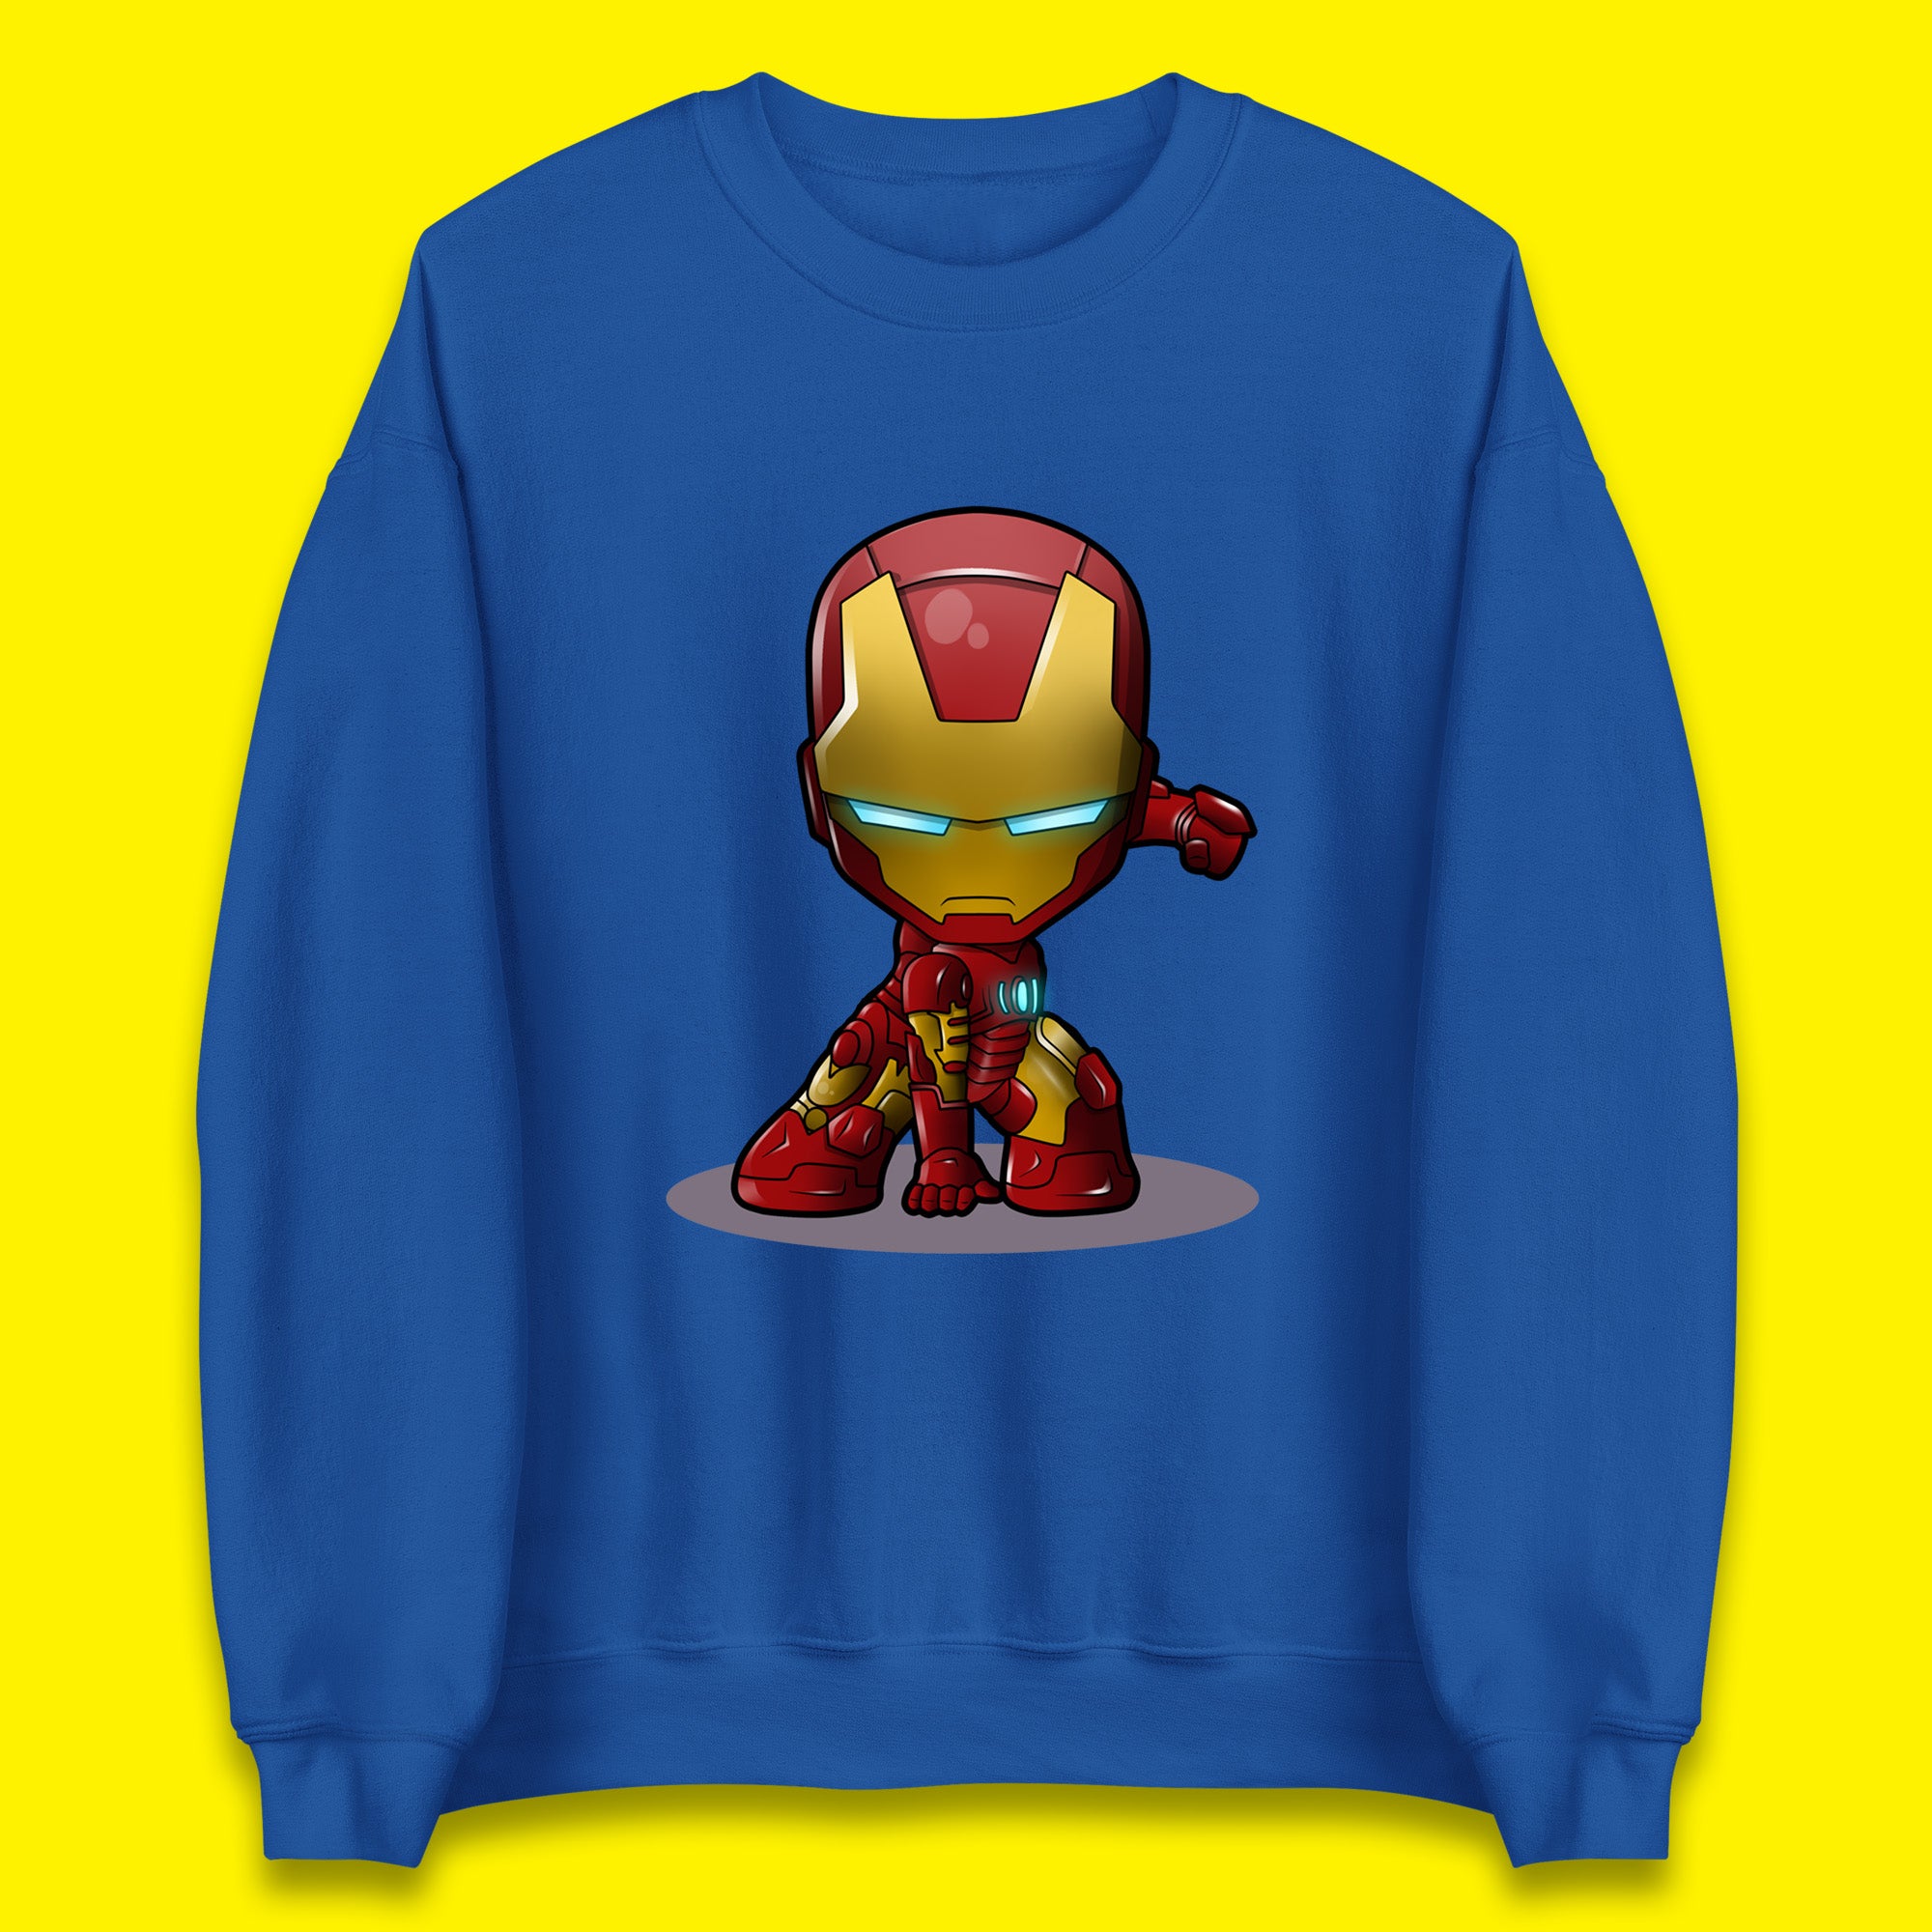 Marvel Avenger Iron Man Movie Character Ironman Costume Superhero Marvel Comics Unisex Sweatshirt